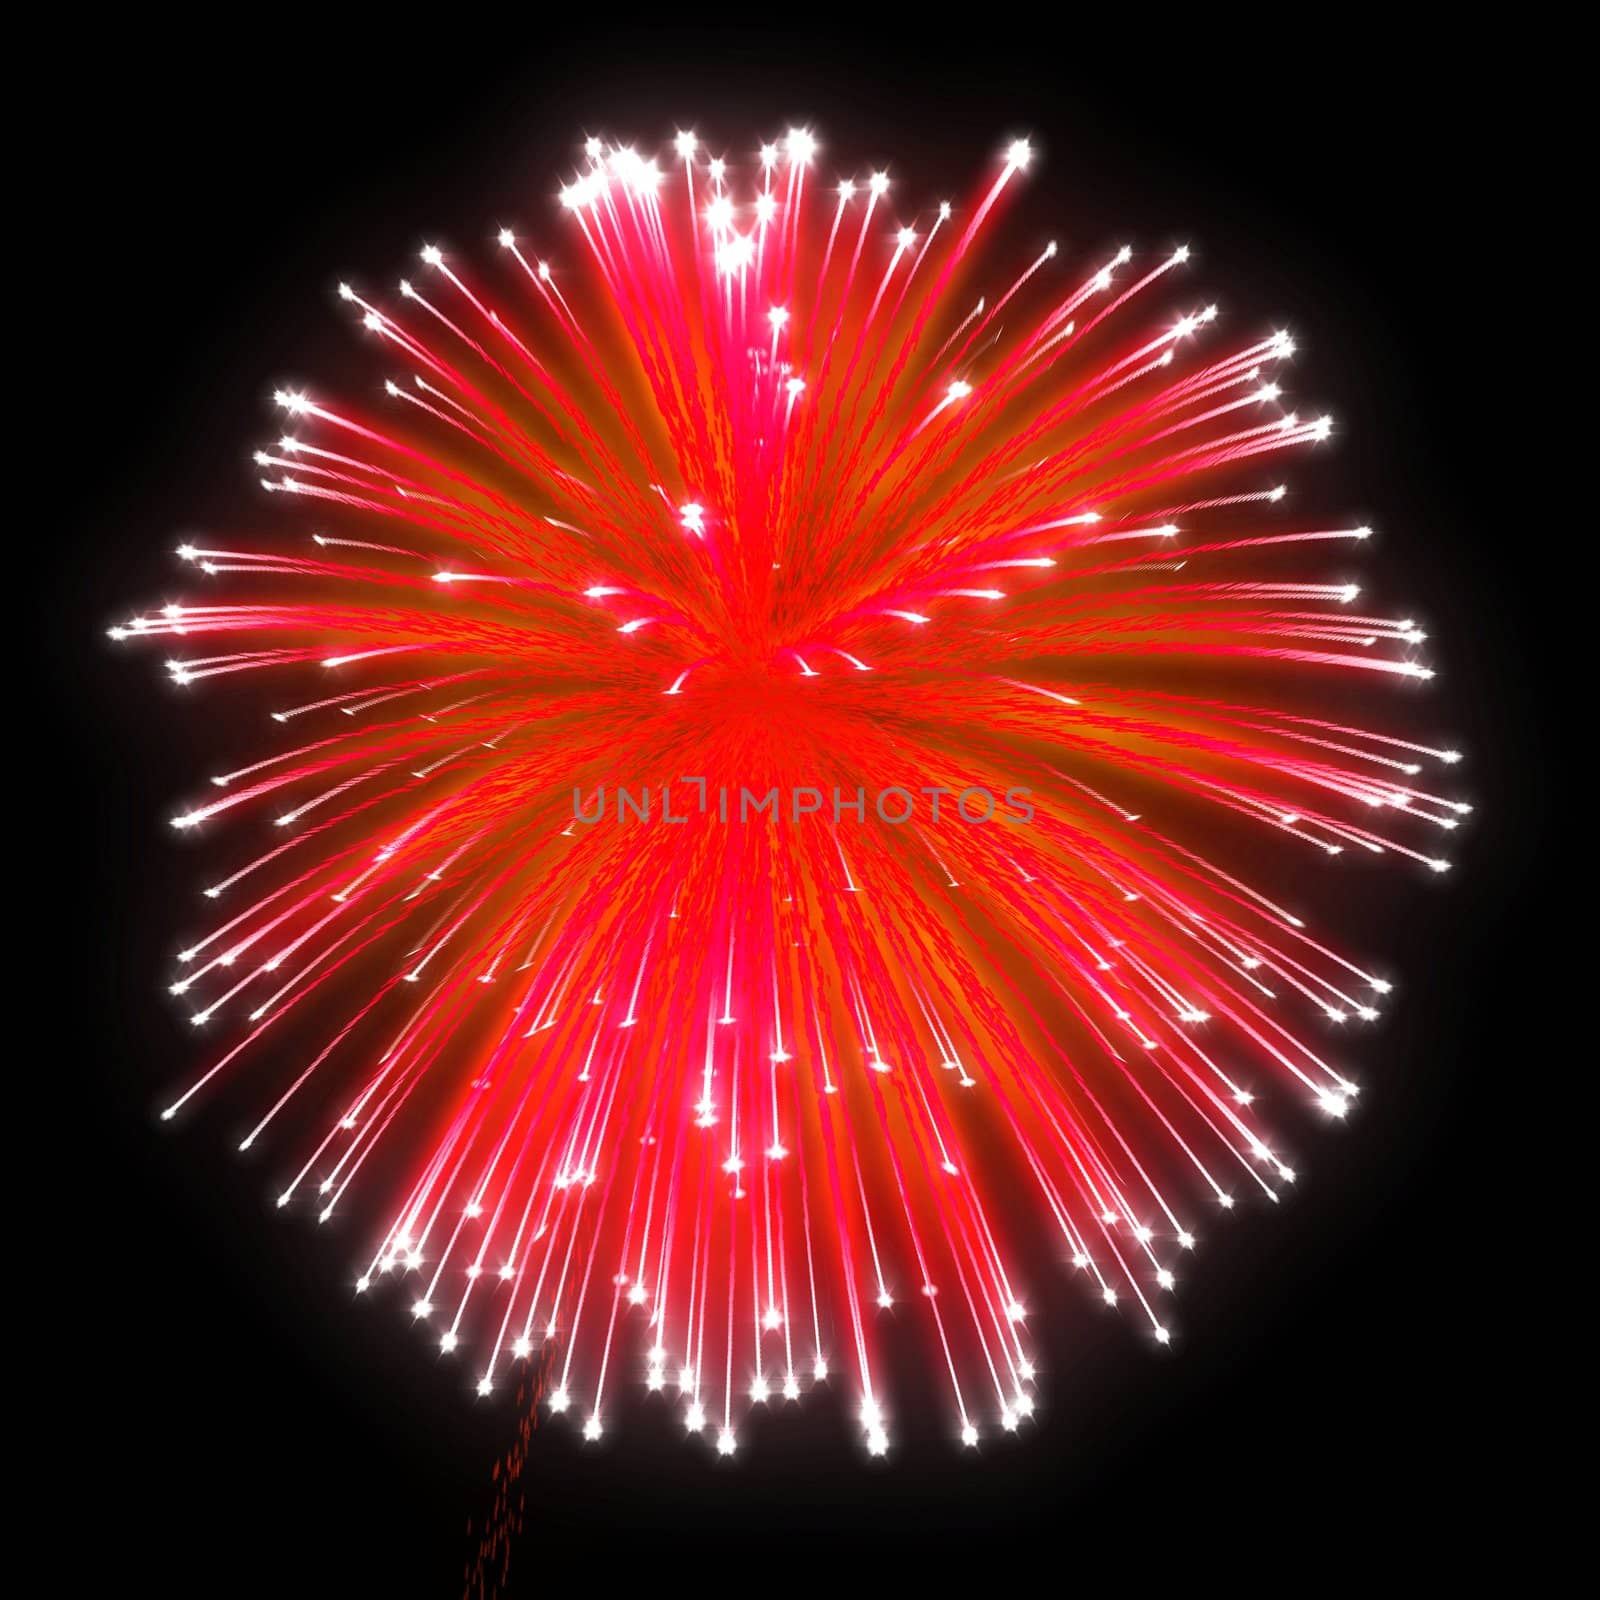 Red festive fireworks at night over black background